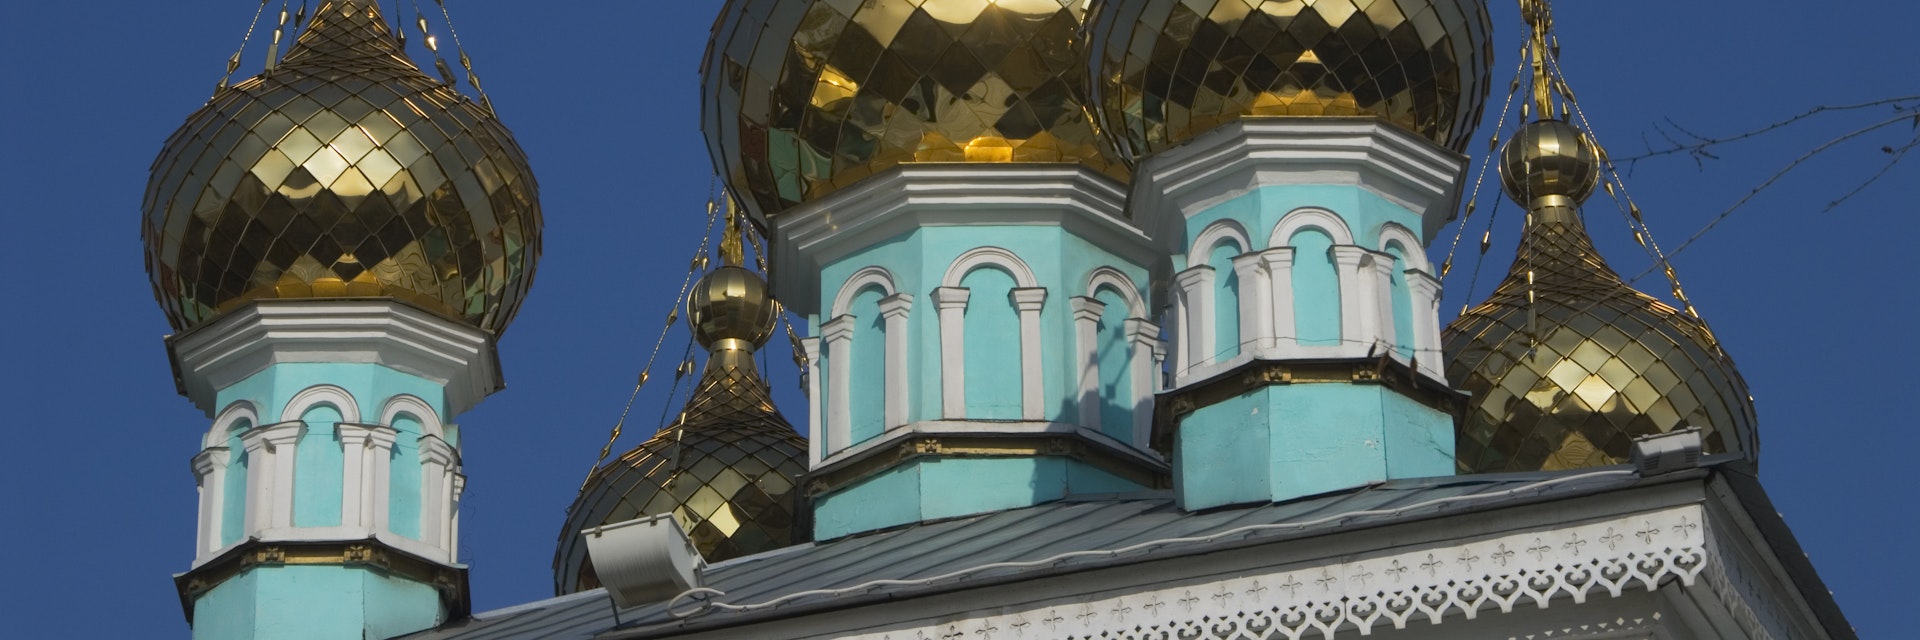 Gold onion domes on turquoise St. Nicholas church (Nikolsky Sobor) on Baytursynuly street.